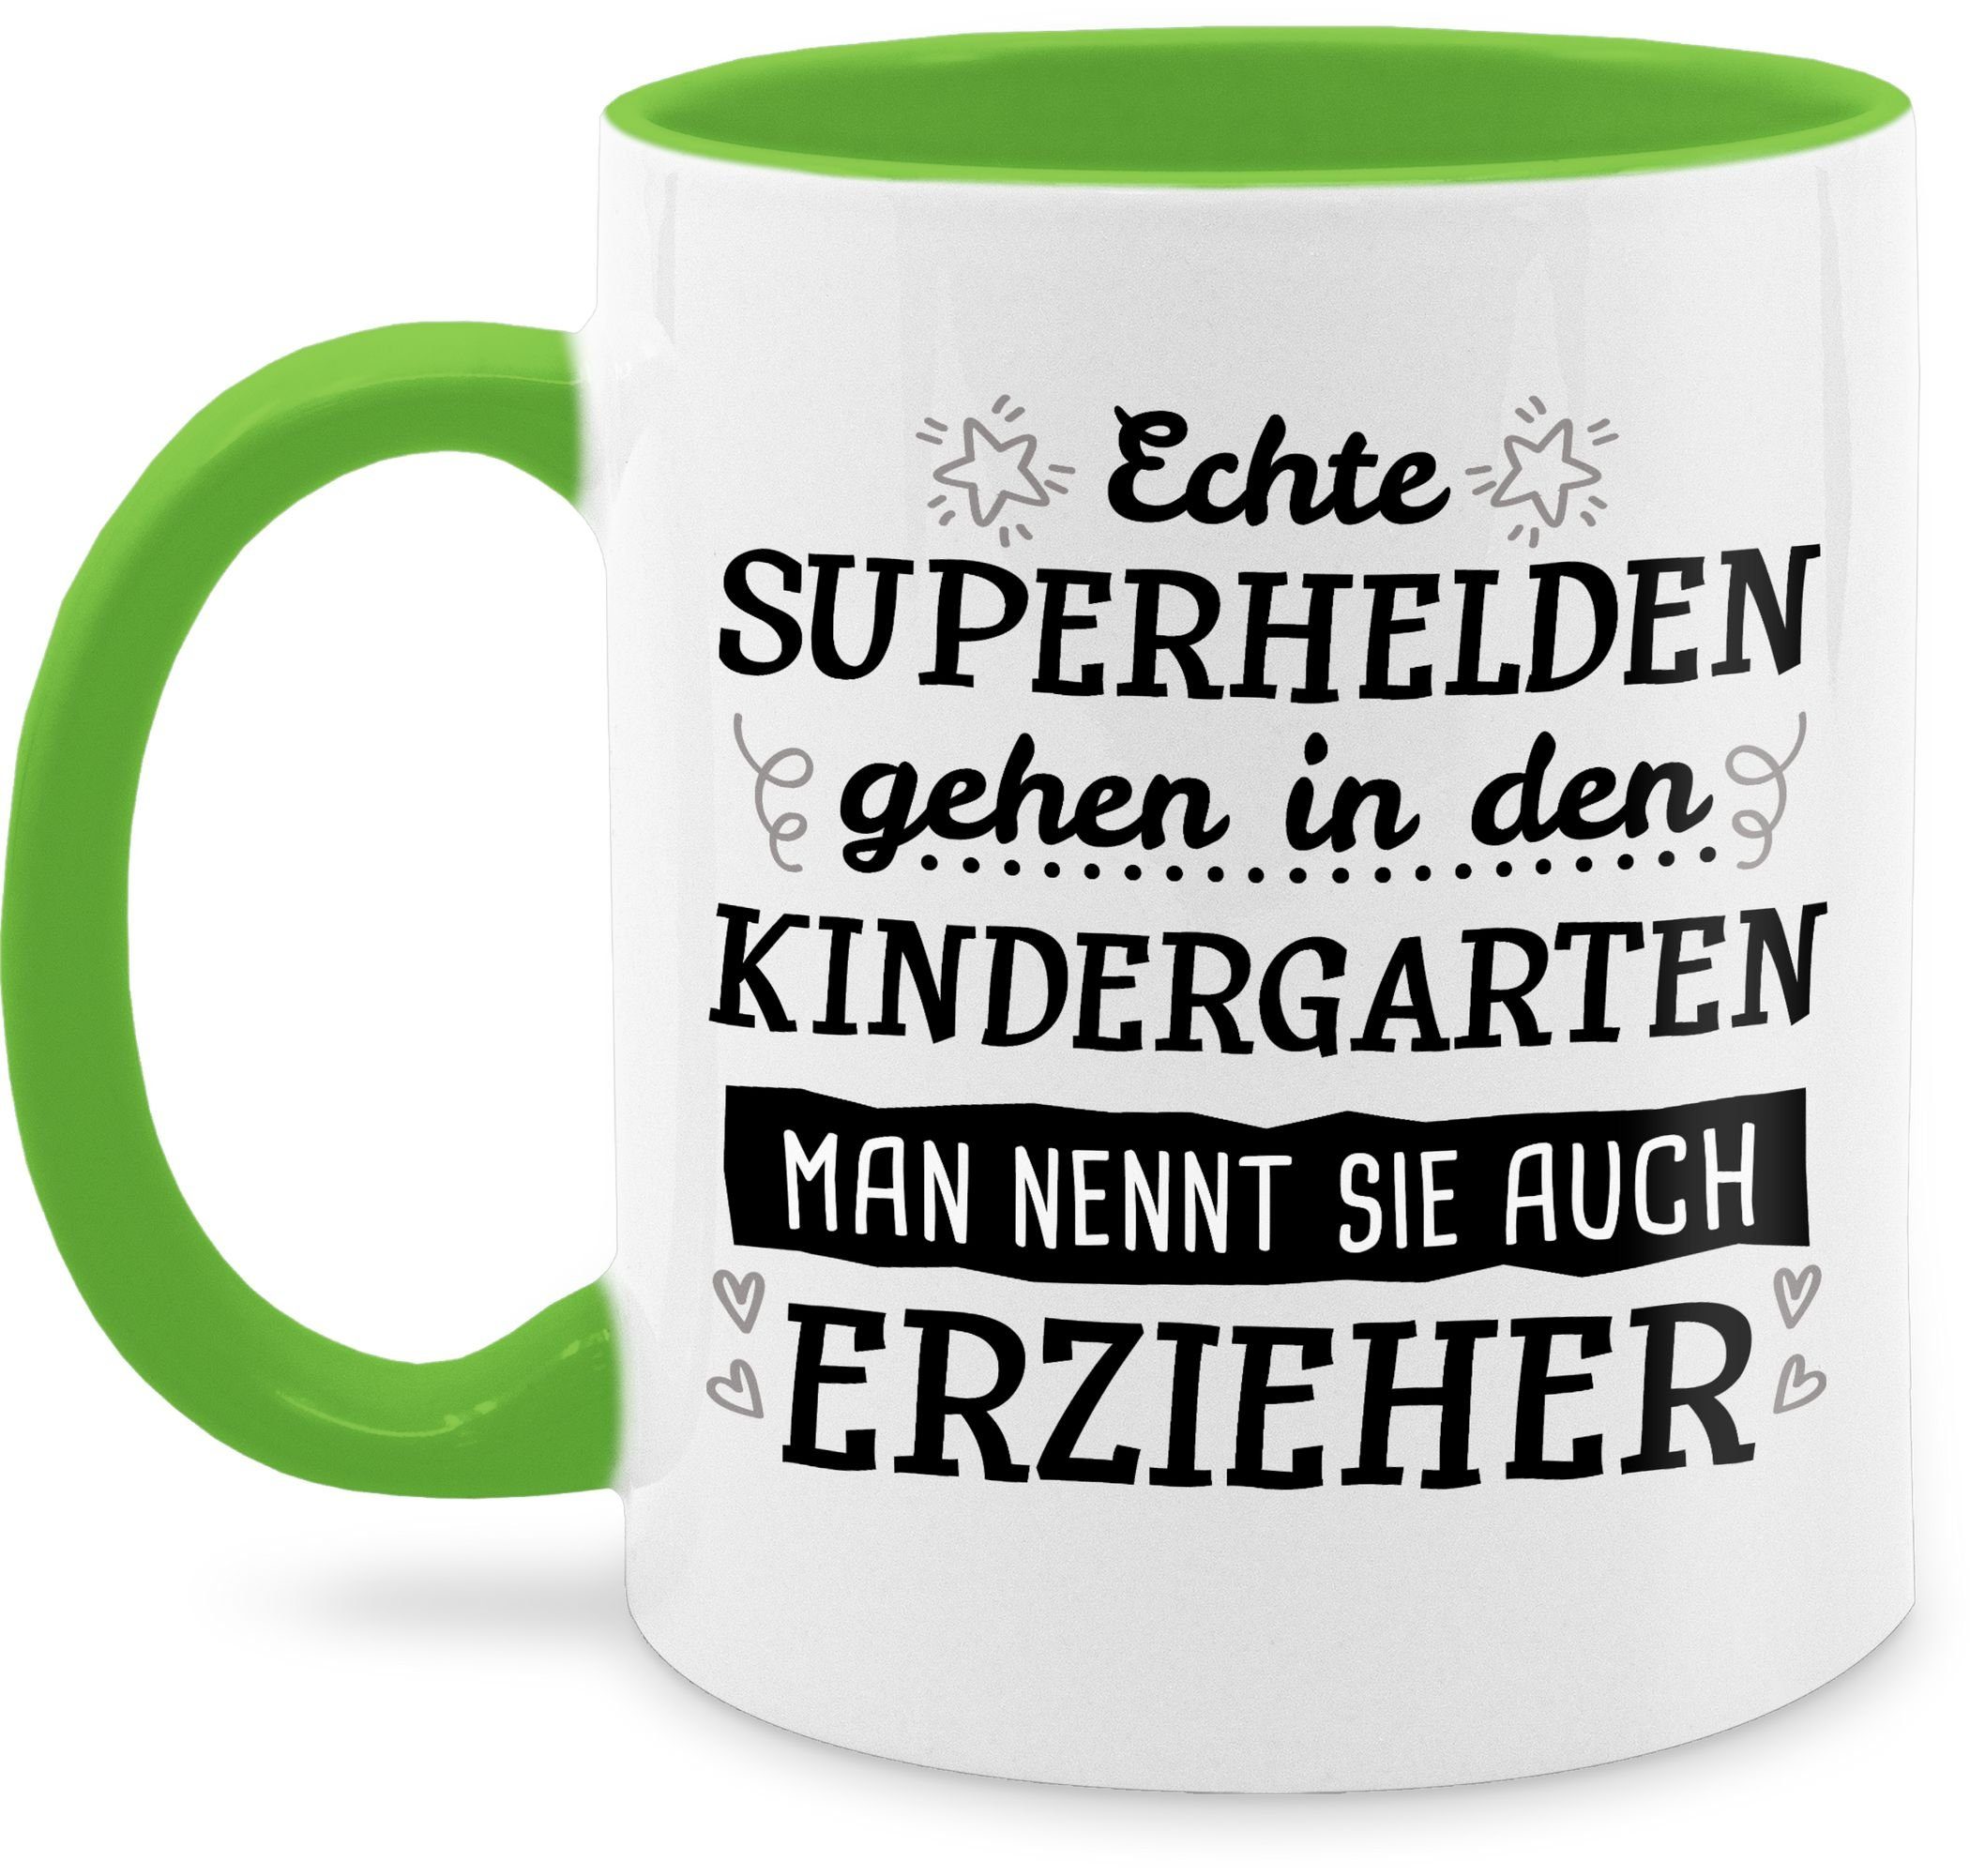 Keramik, Erzieher, Geschenk Kindergarten Tasse Hellgrün - Kaffeetasse Shirtracer gehen 3 in Superhelden Job den Echte